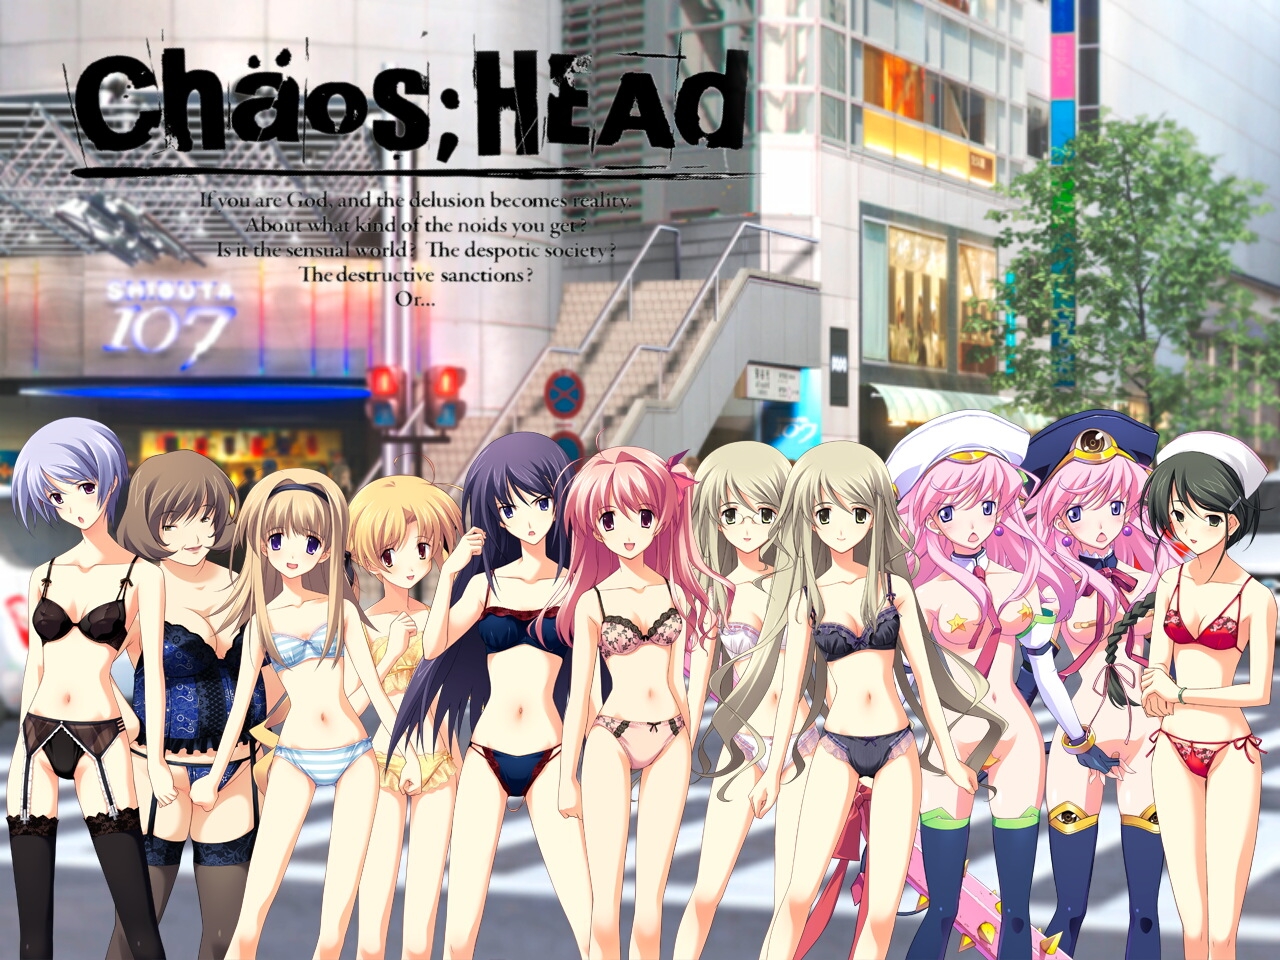 Chaos Head 37